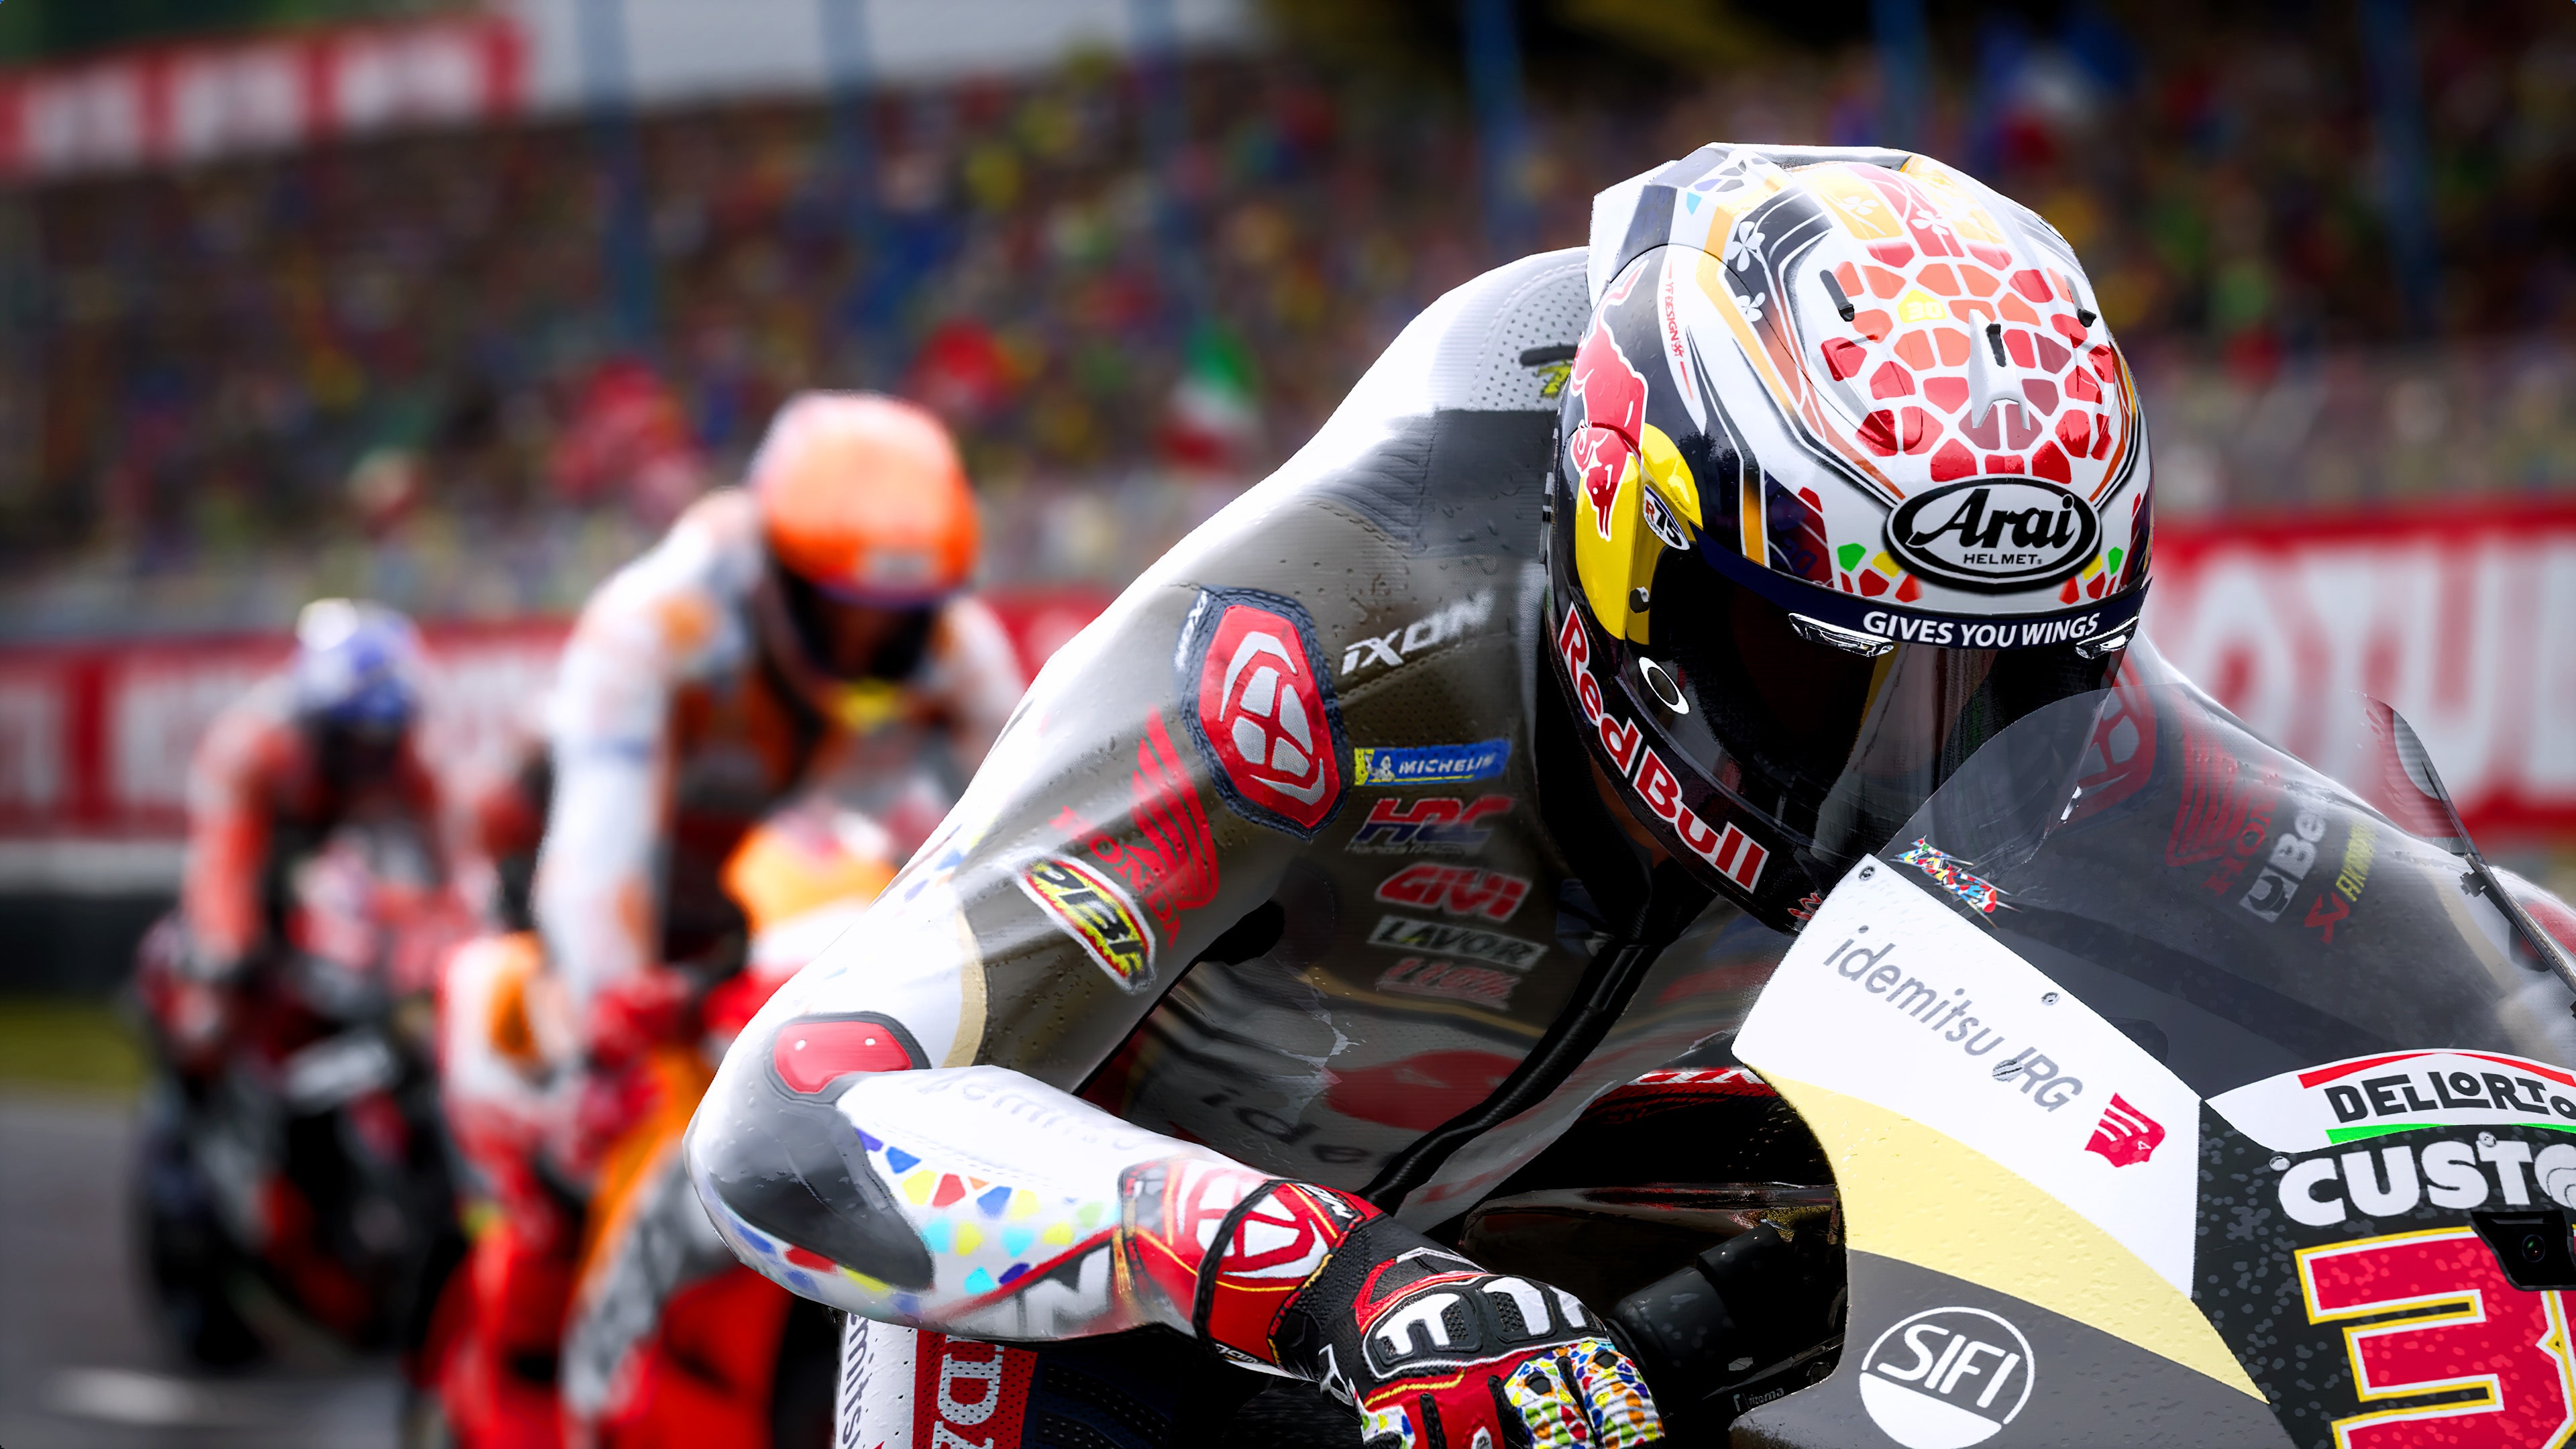 MotoGP 23, Jogo PS4